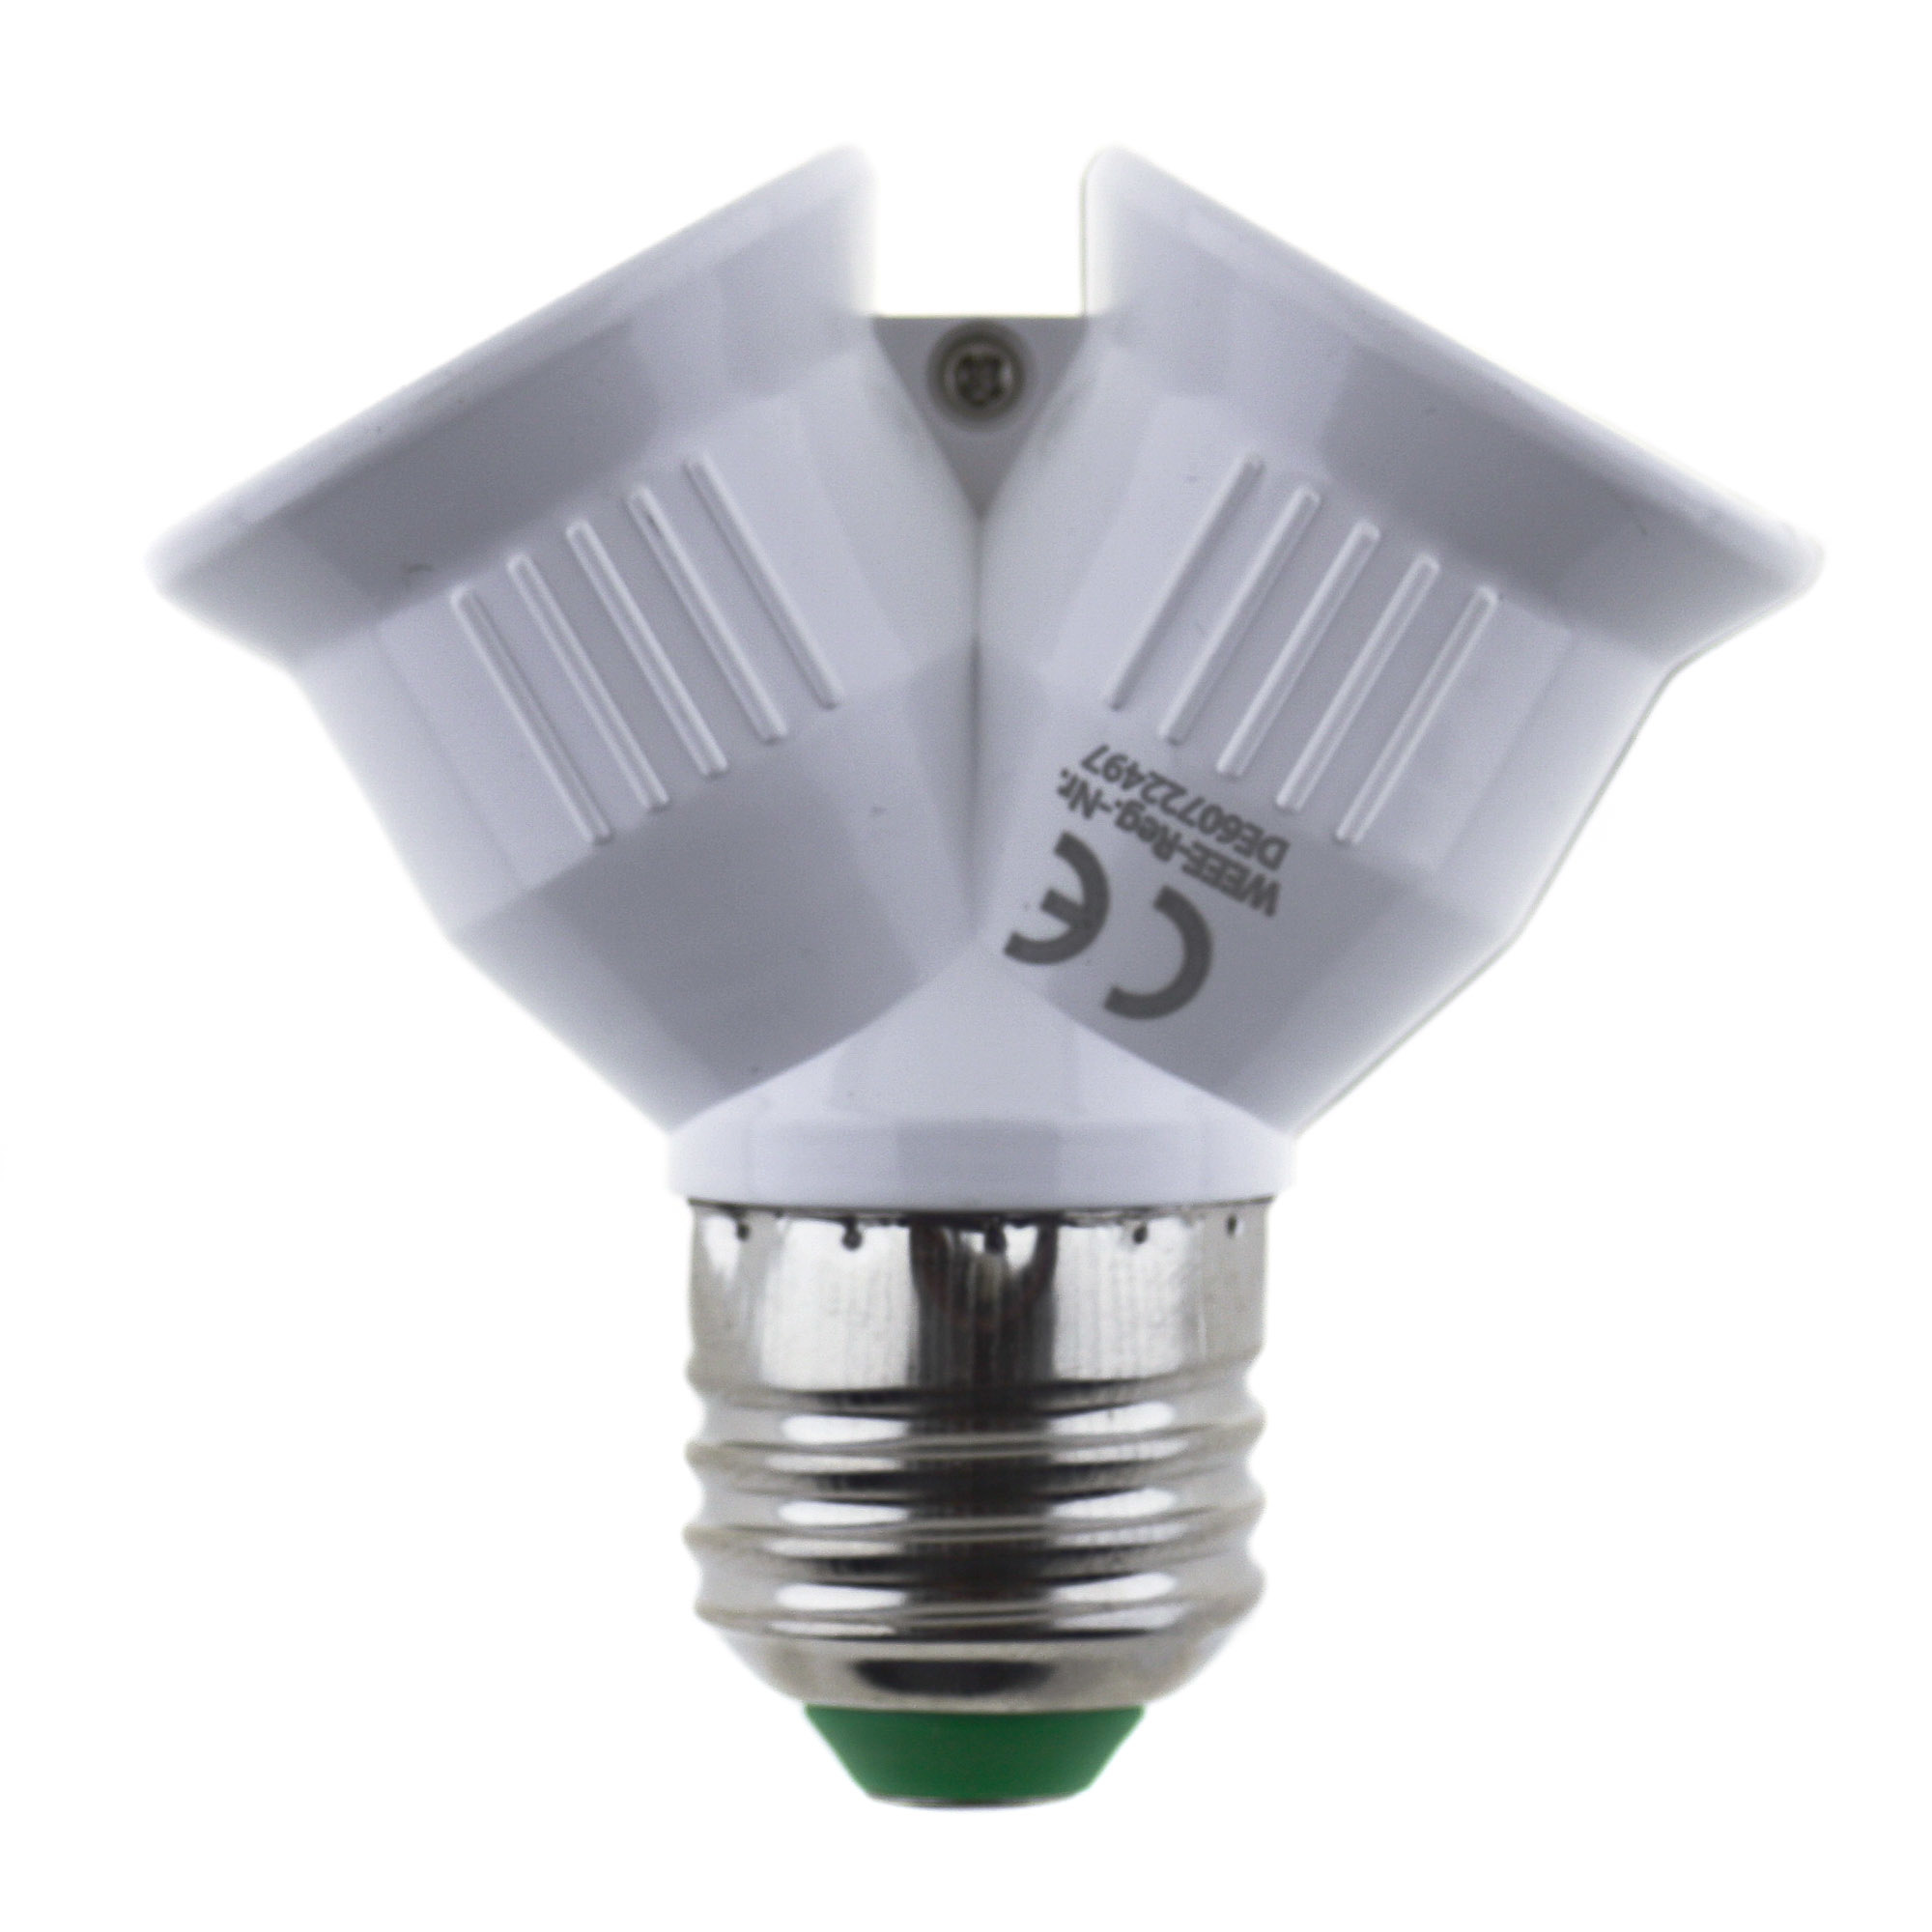 Lamp socket adaptor E27 to 2x E27 - 2PCS